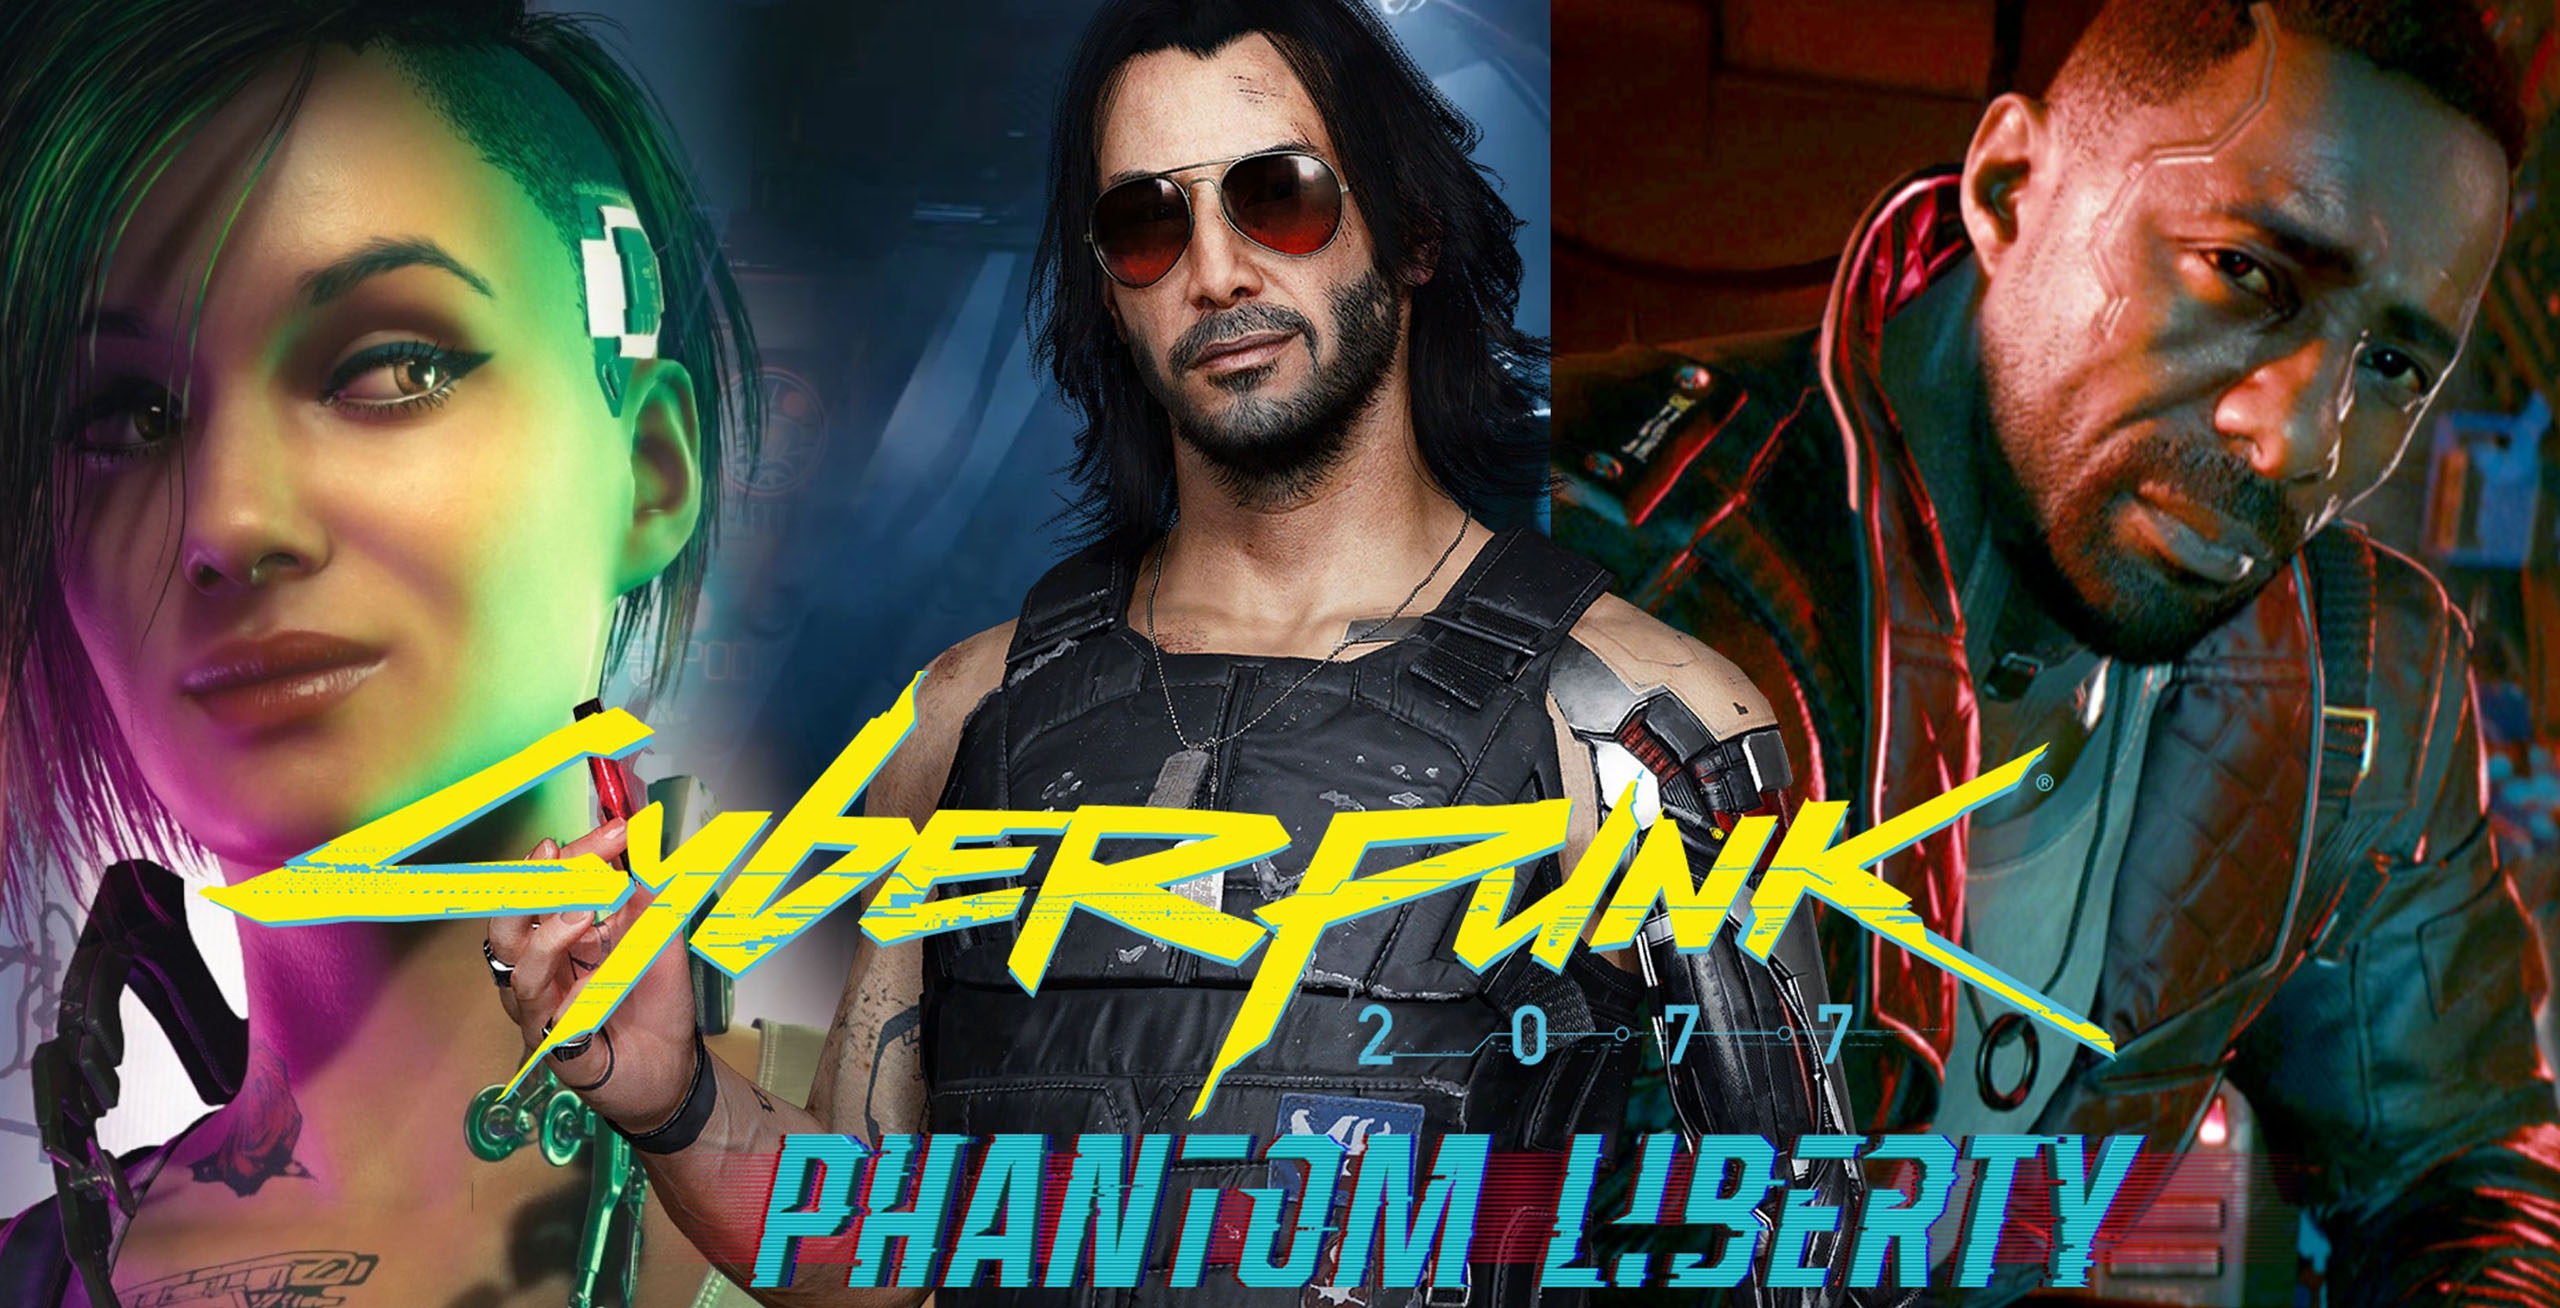 Cyberpunk 2077: Phantom Liberty ภาคปฏิบัติ: สายลับระทึกขวัญแห่งอนาคตที่งดงาม